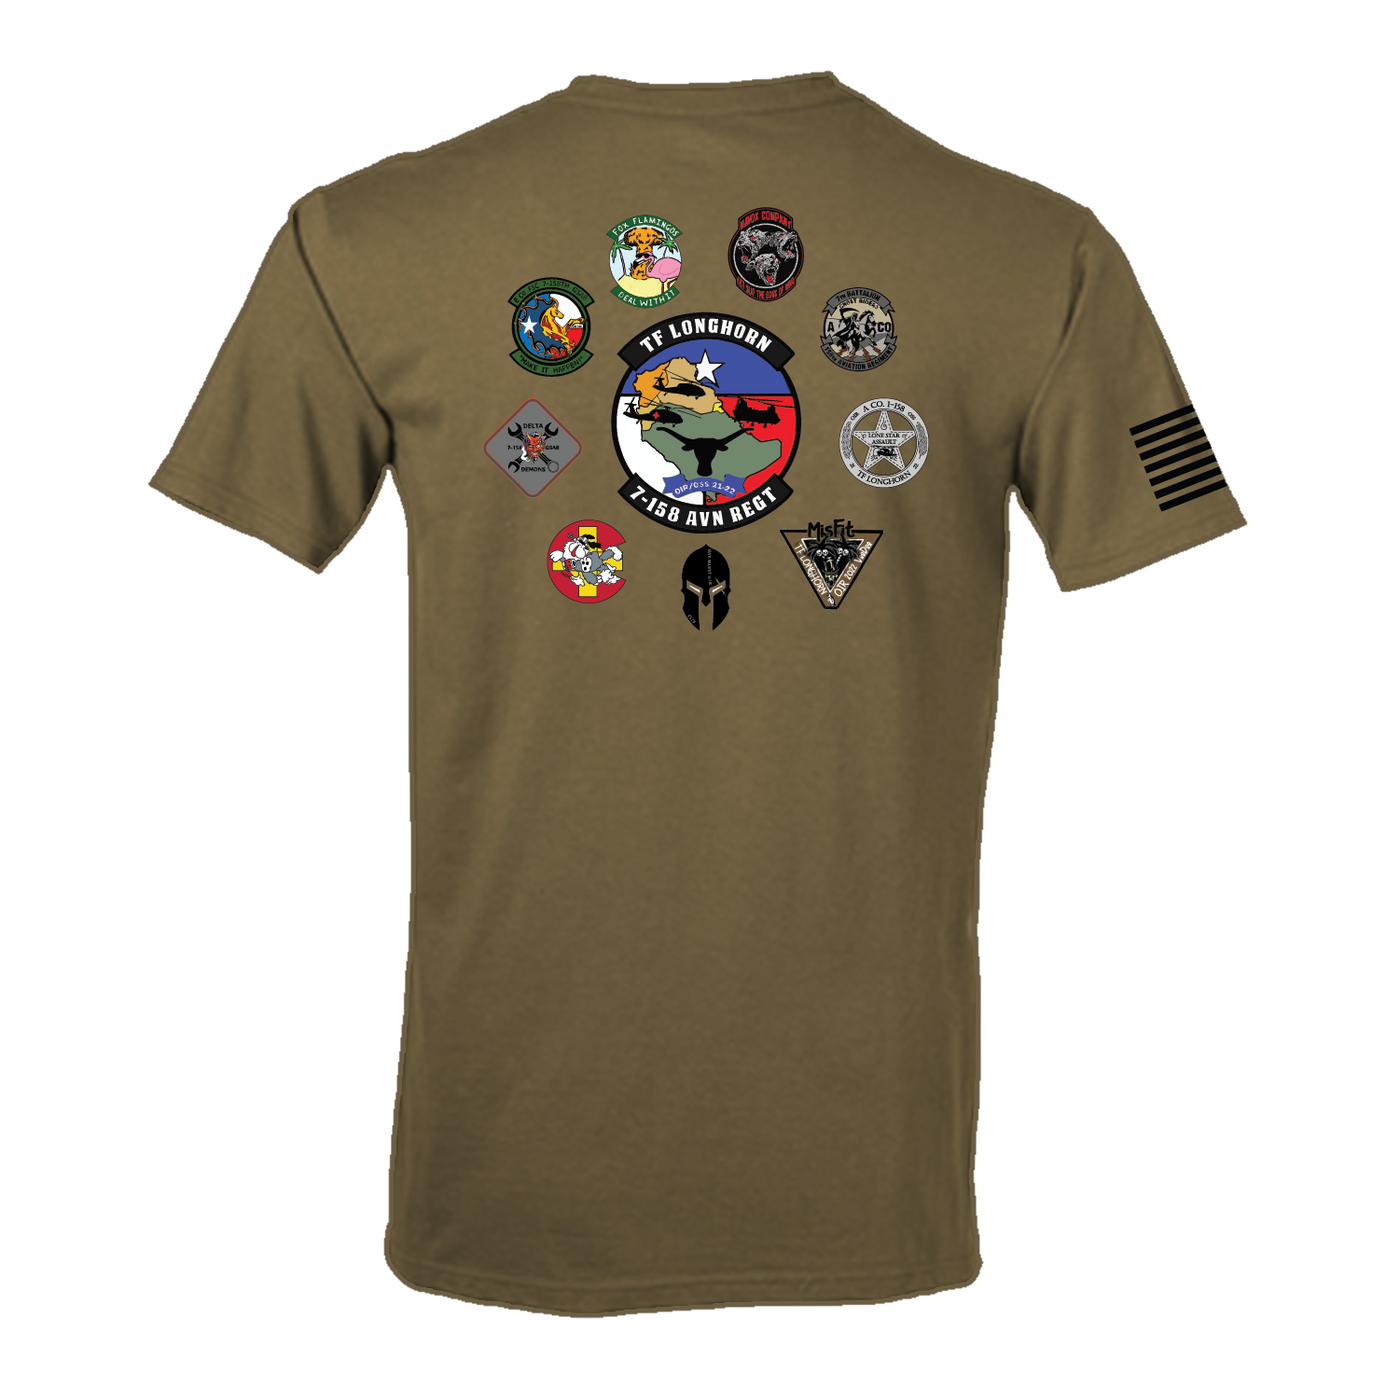 7-158 TF Longhorn Flight Approved T-Shirt